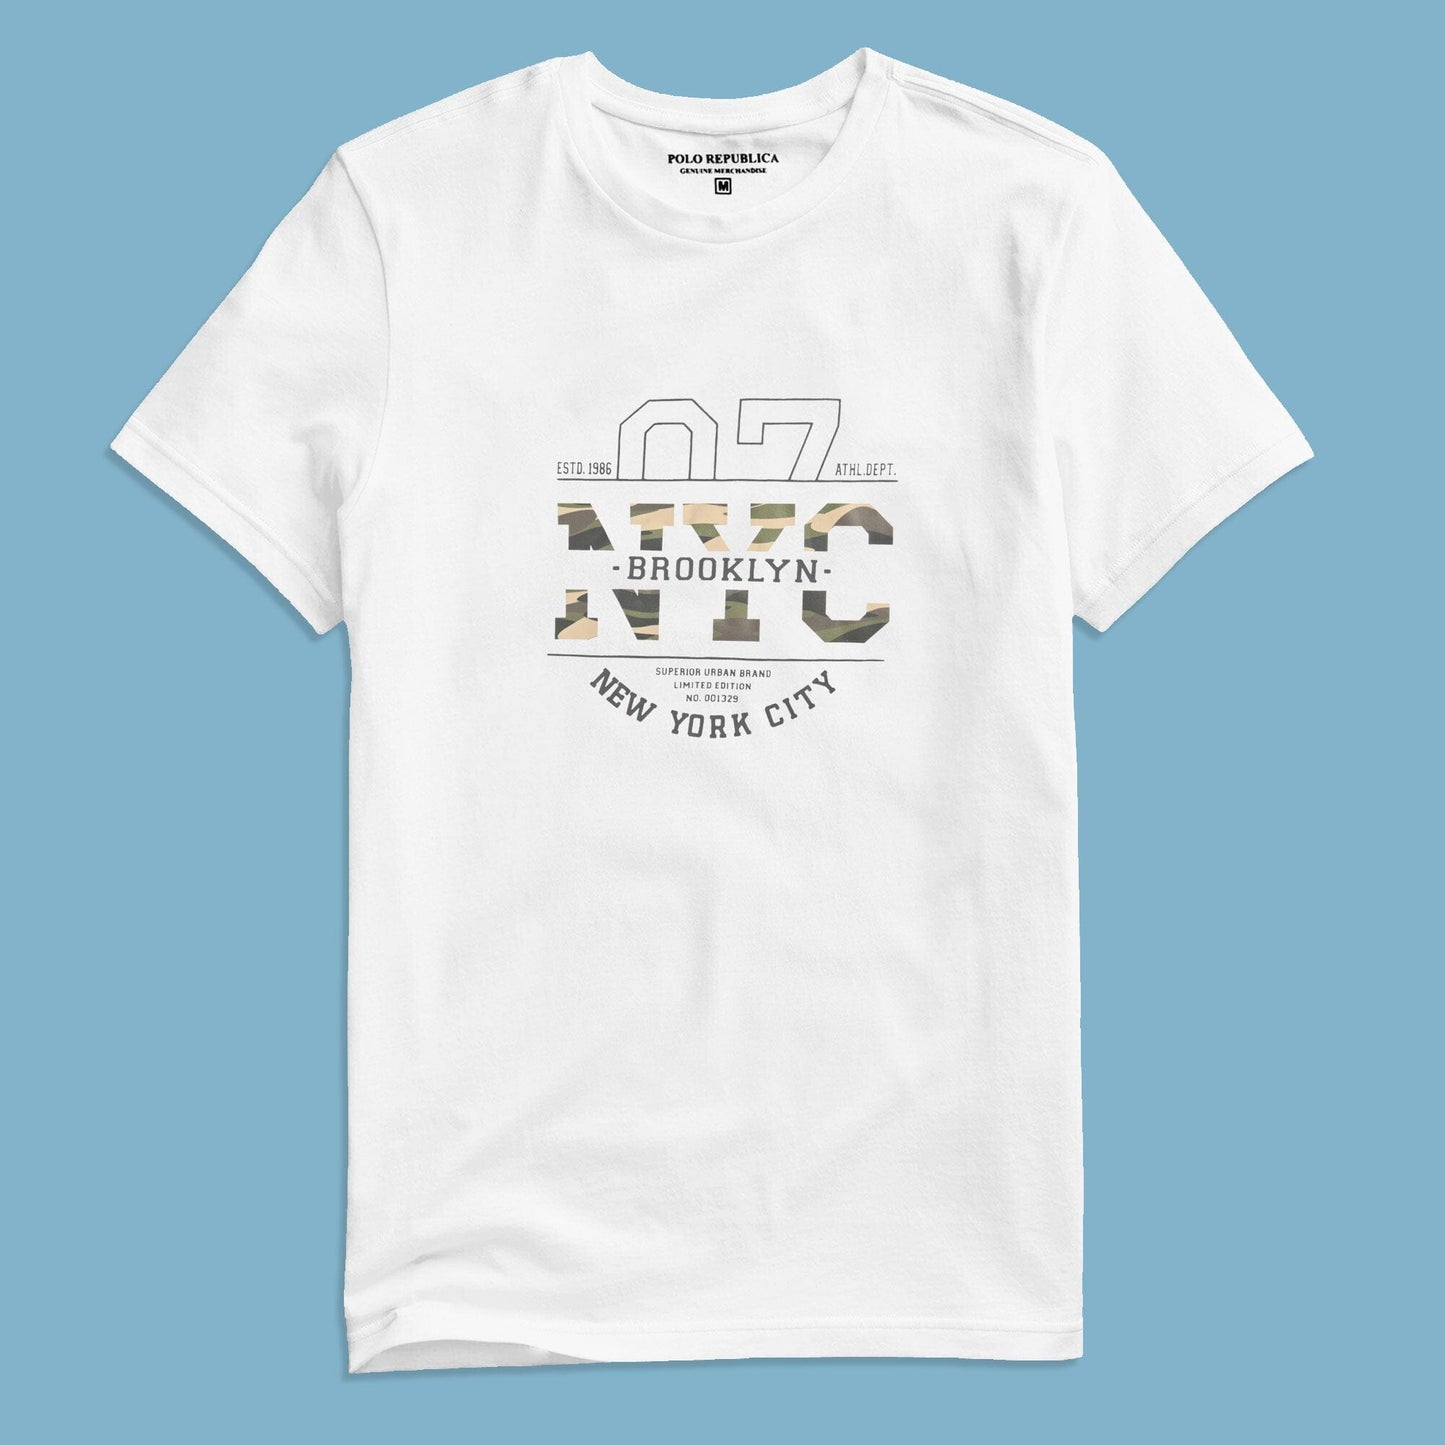 Polo Republica Men's NYC 7 Printed Short Sleeve Tee Shirt